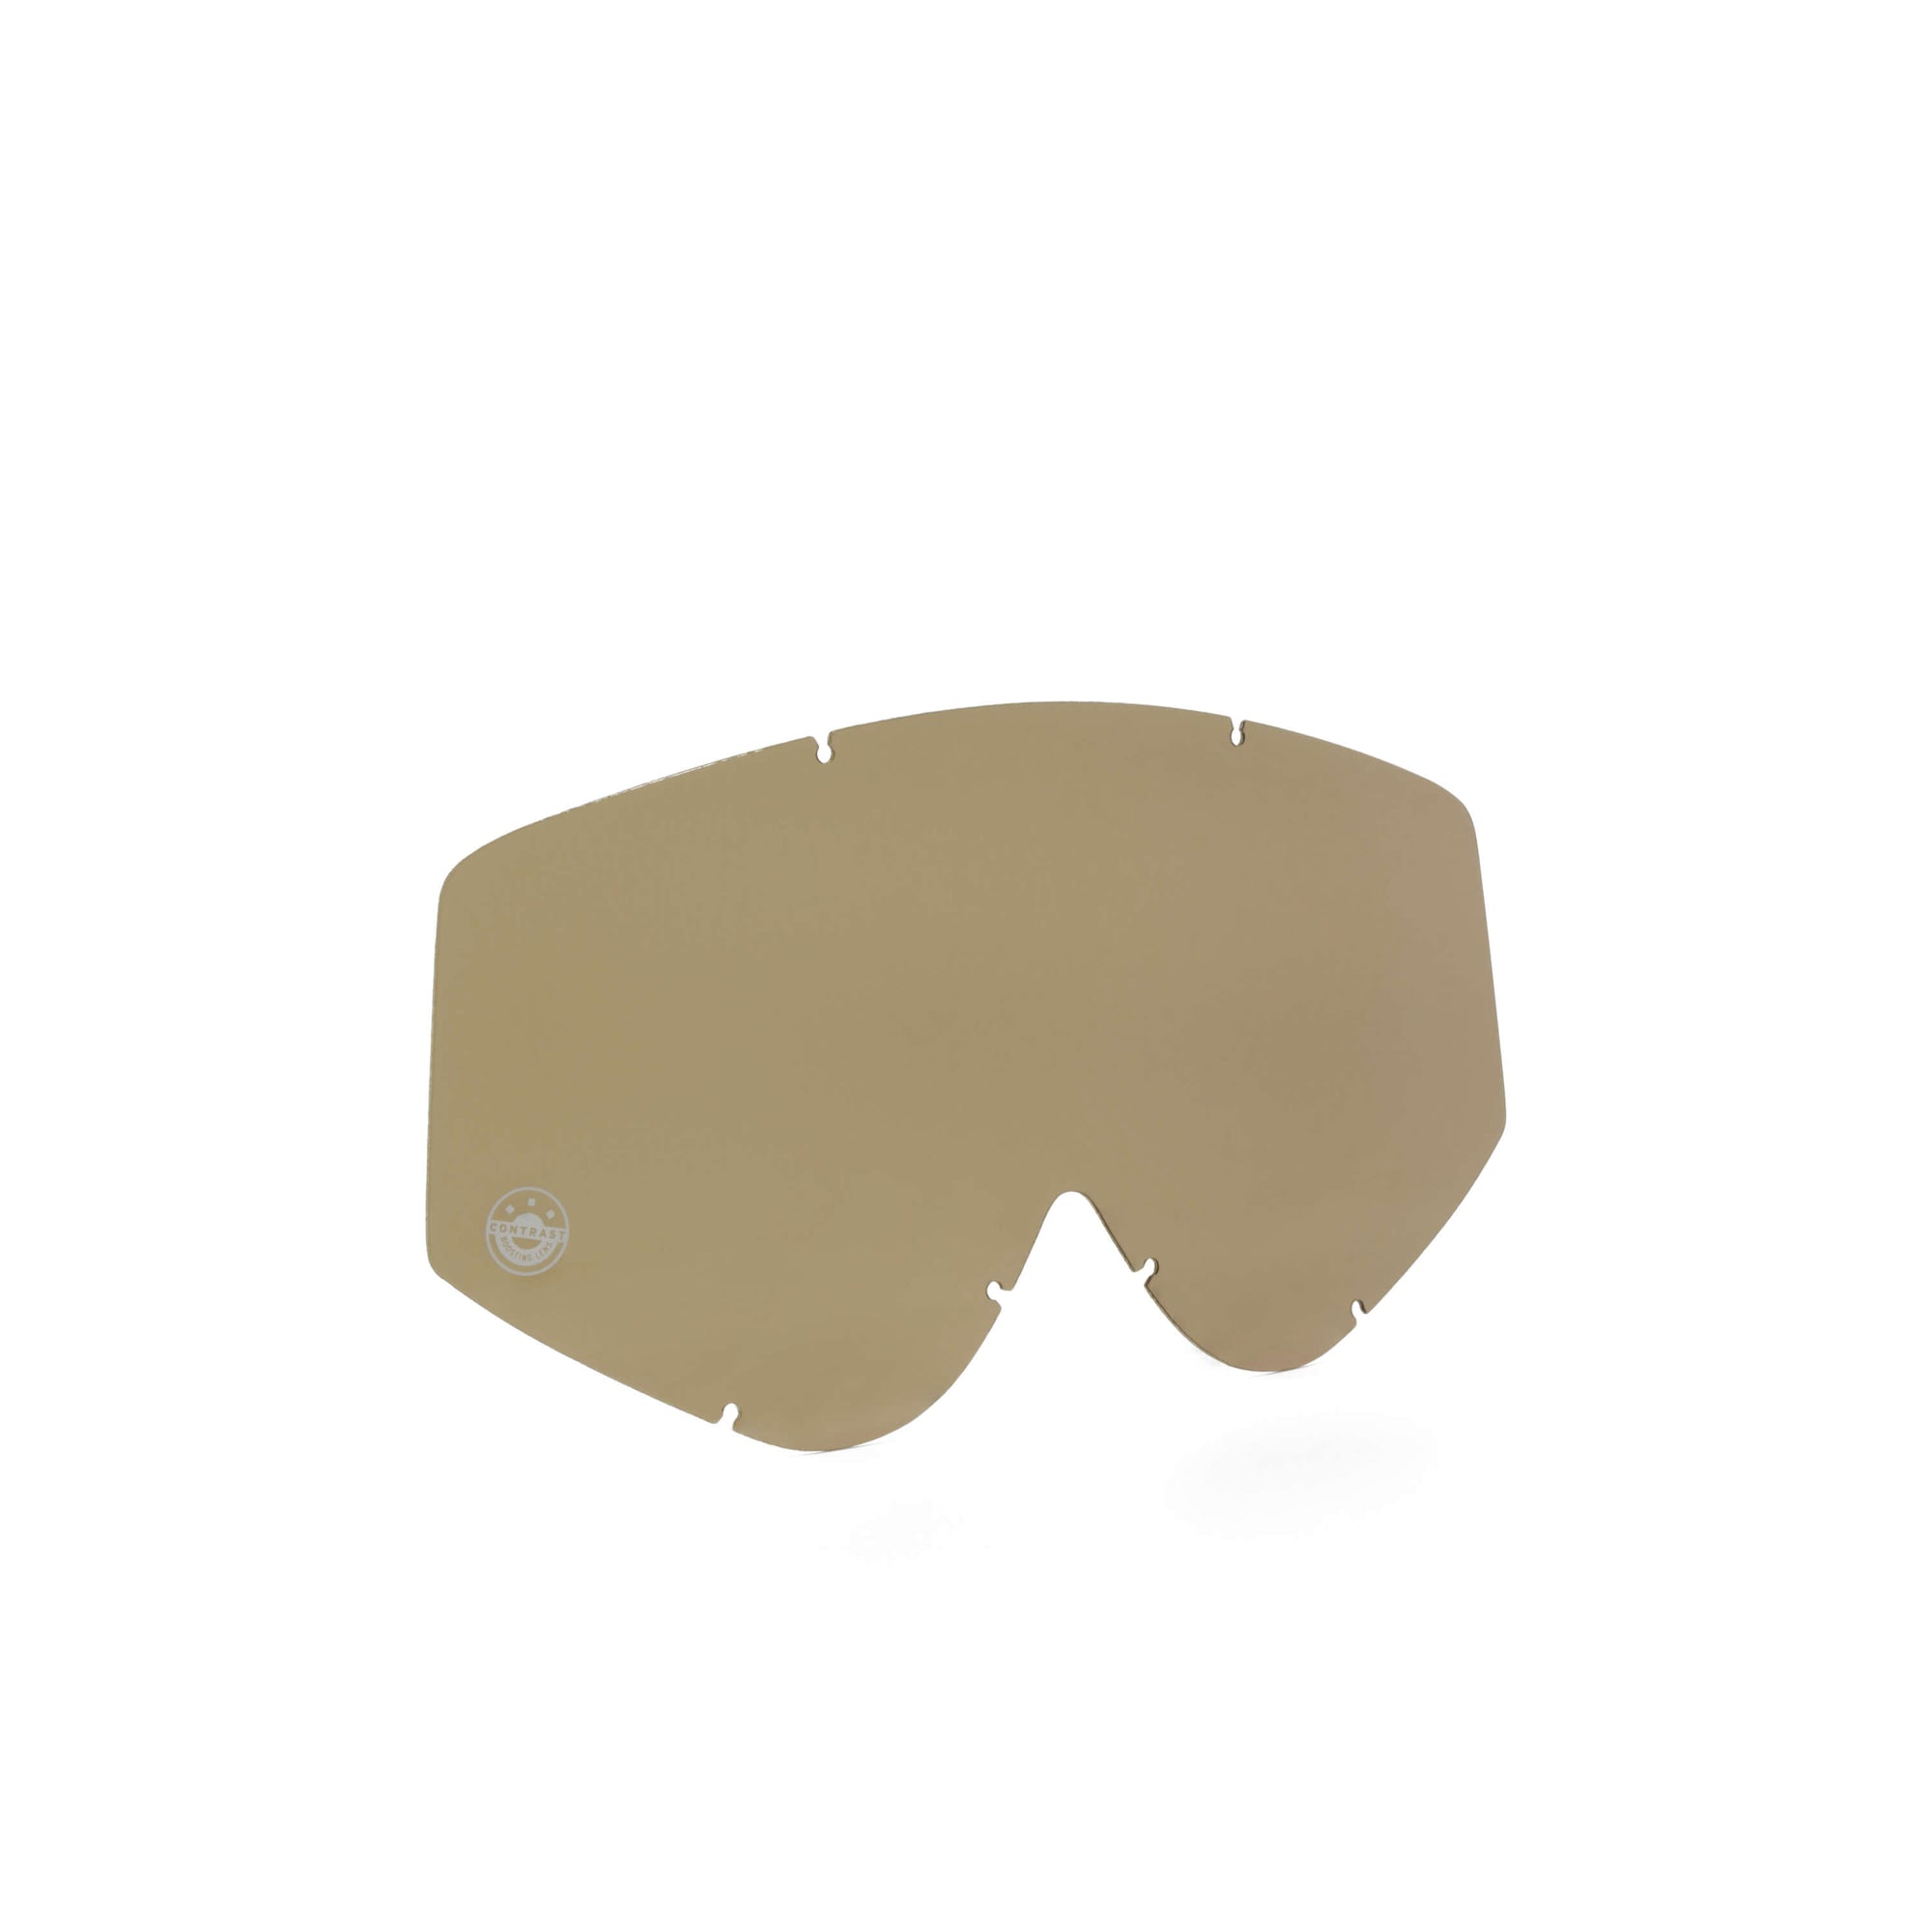 Nastify/Soaza Mtb Single Lens - Goggles Spare Lenses|LENADJS29